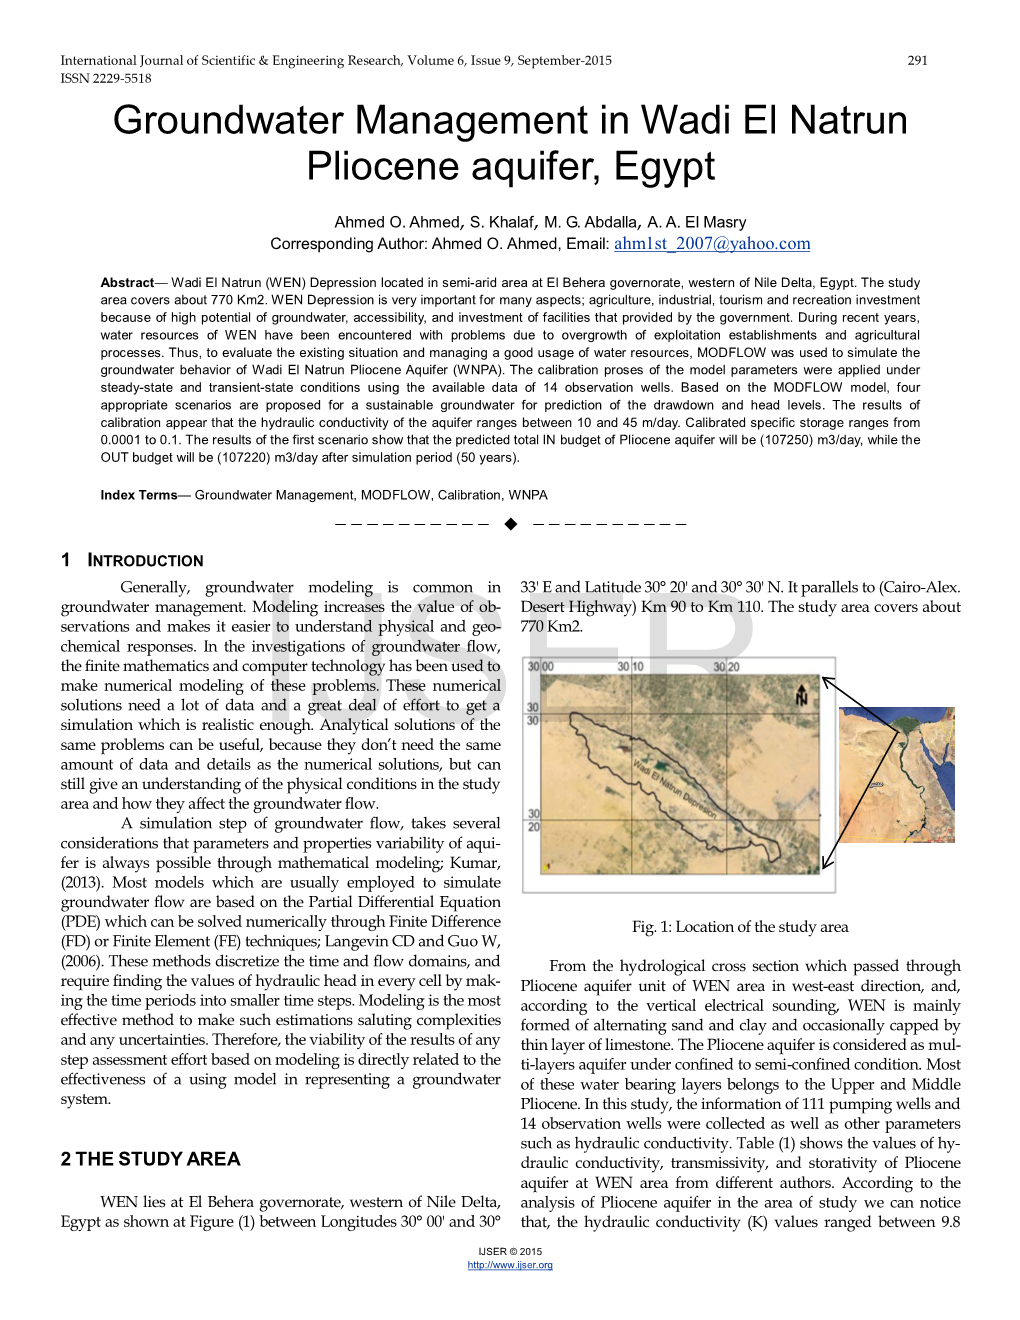 Groundwater Management in Wadi El Natrun Pliocene Aquifer, Egypt